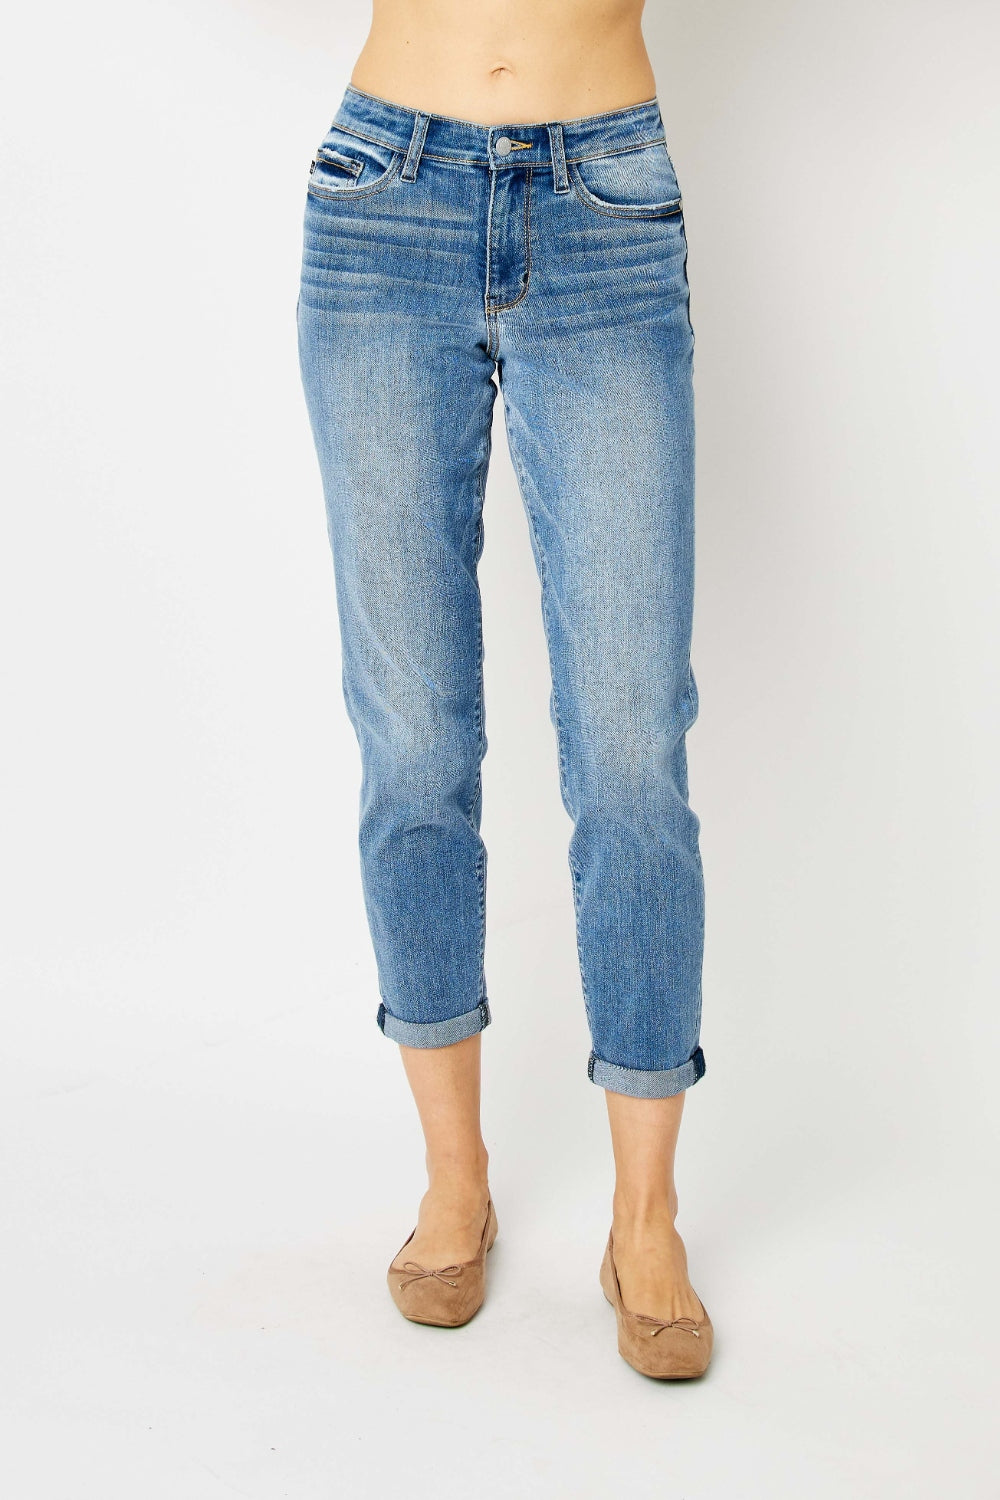 Judy Blue Full Size Cuffed Hem Slim Jeans pants Krazy Heart Designs Boutique   